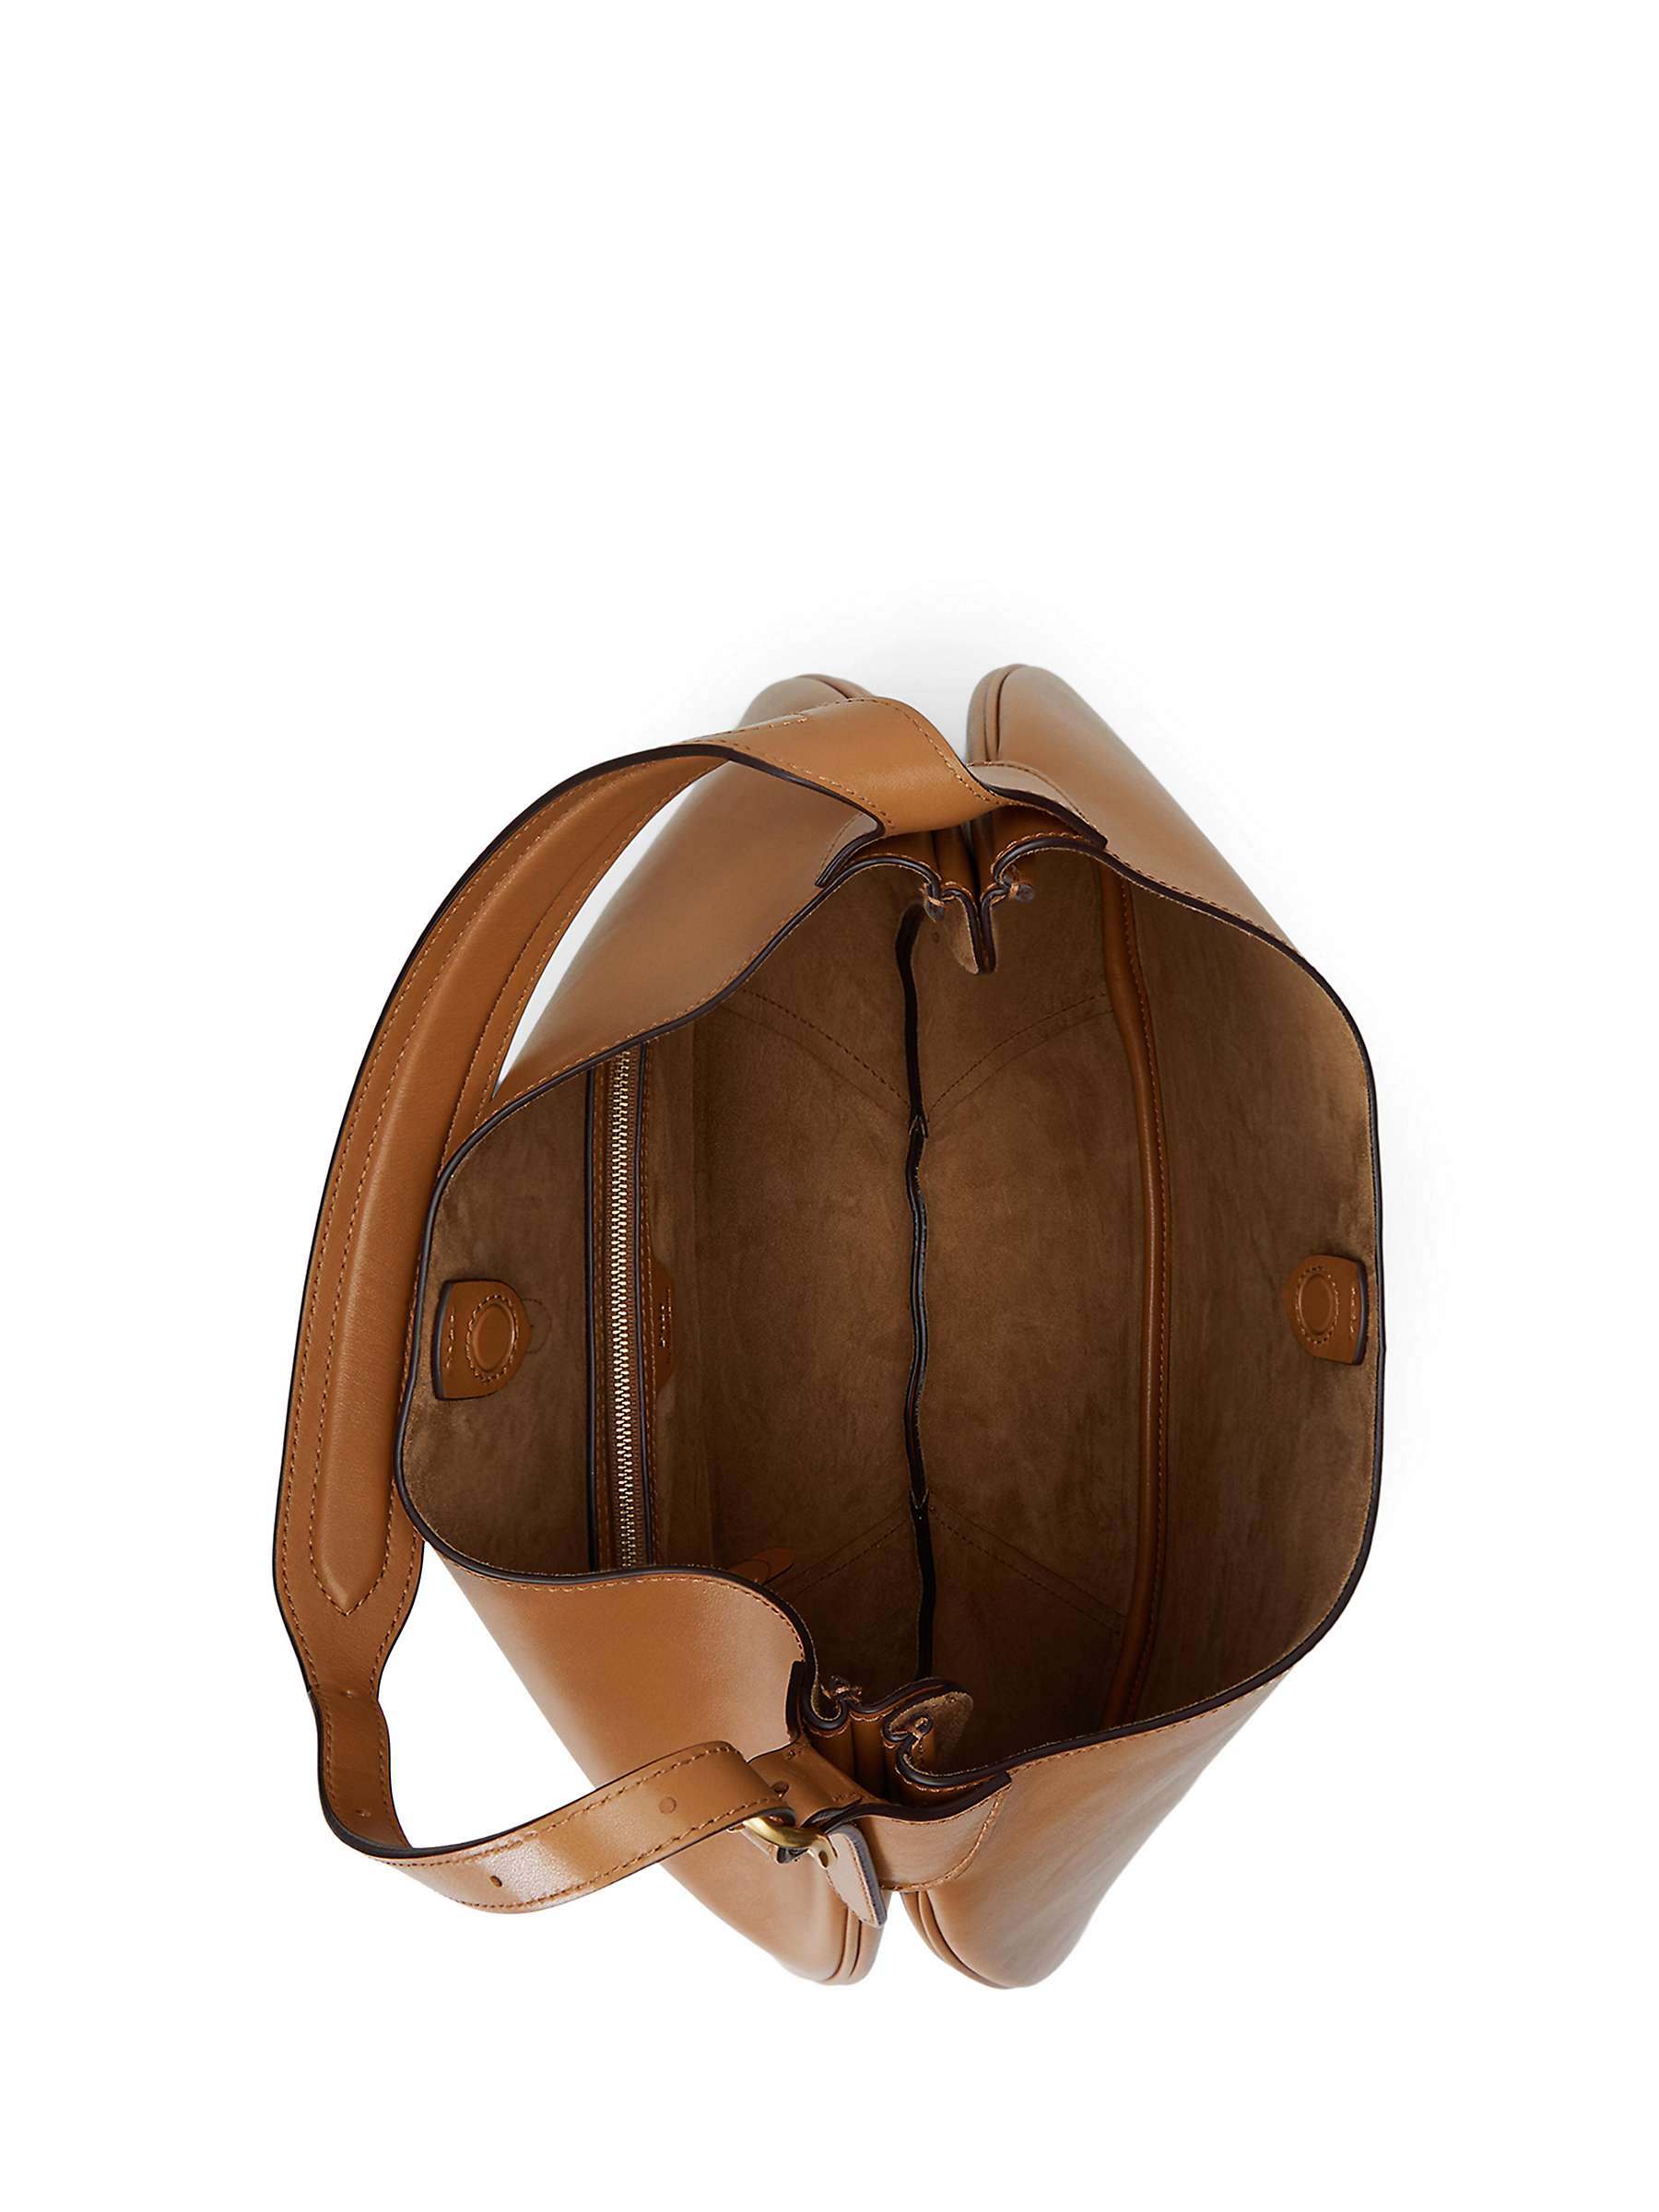 Buy Polo Ralph Lauren ID Leather Shoulder Bag, Tan Online at johnlewis.com